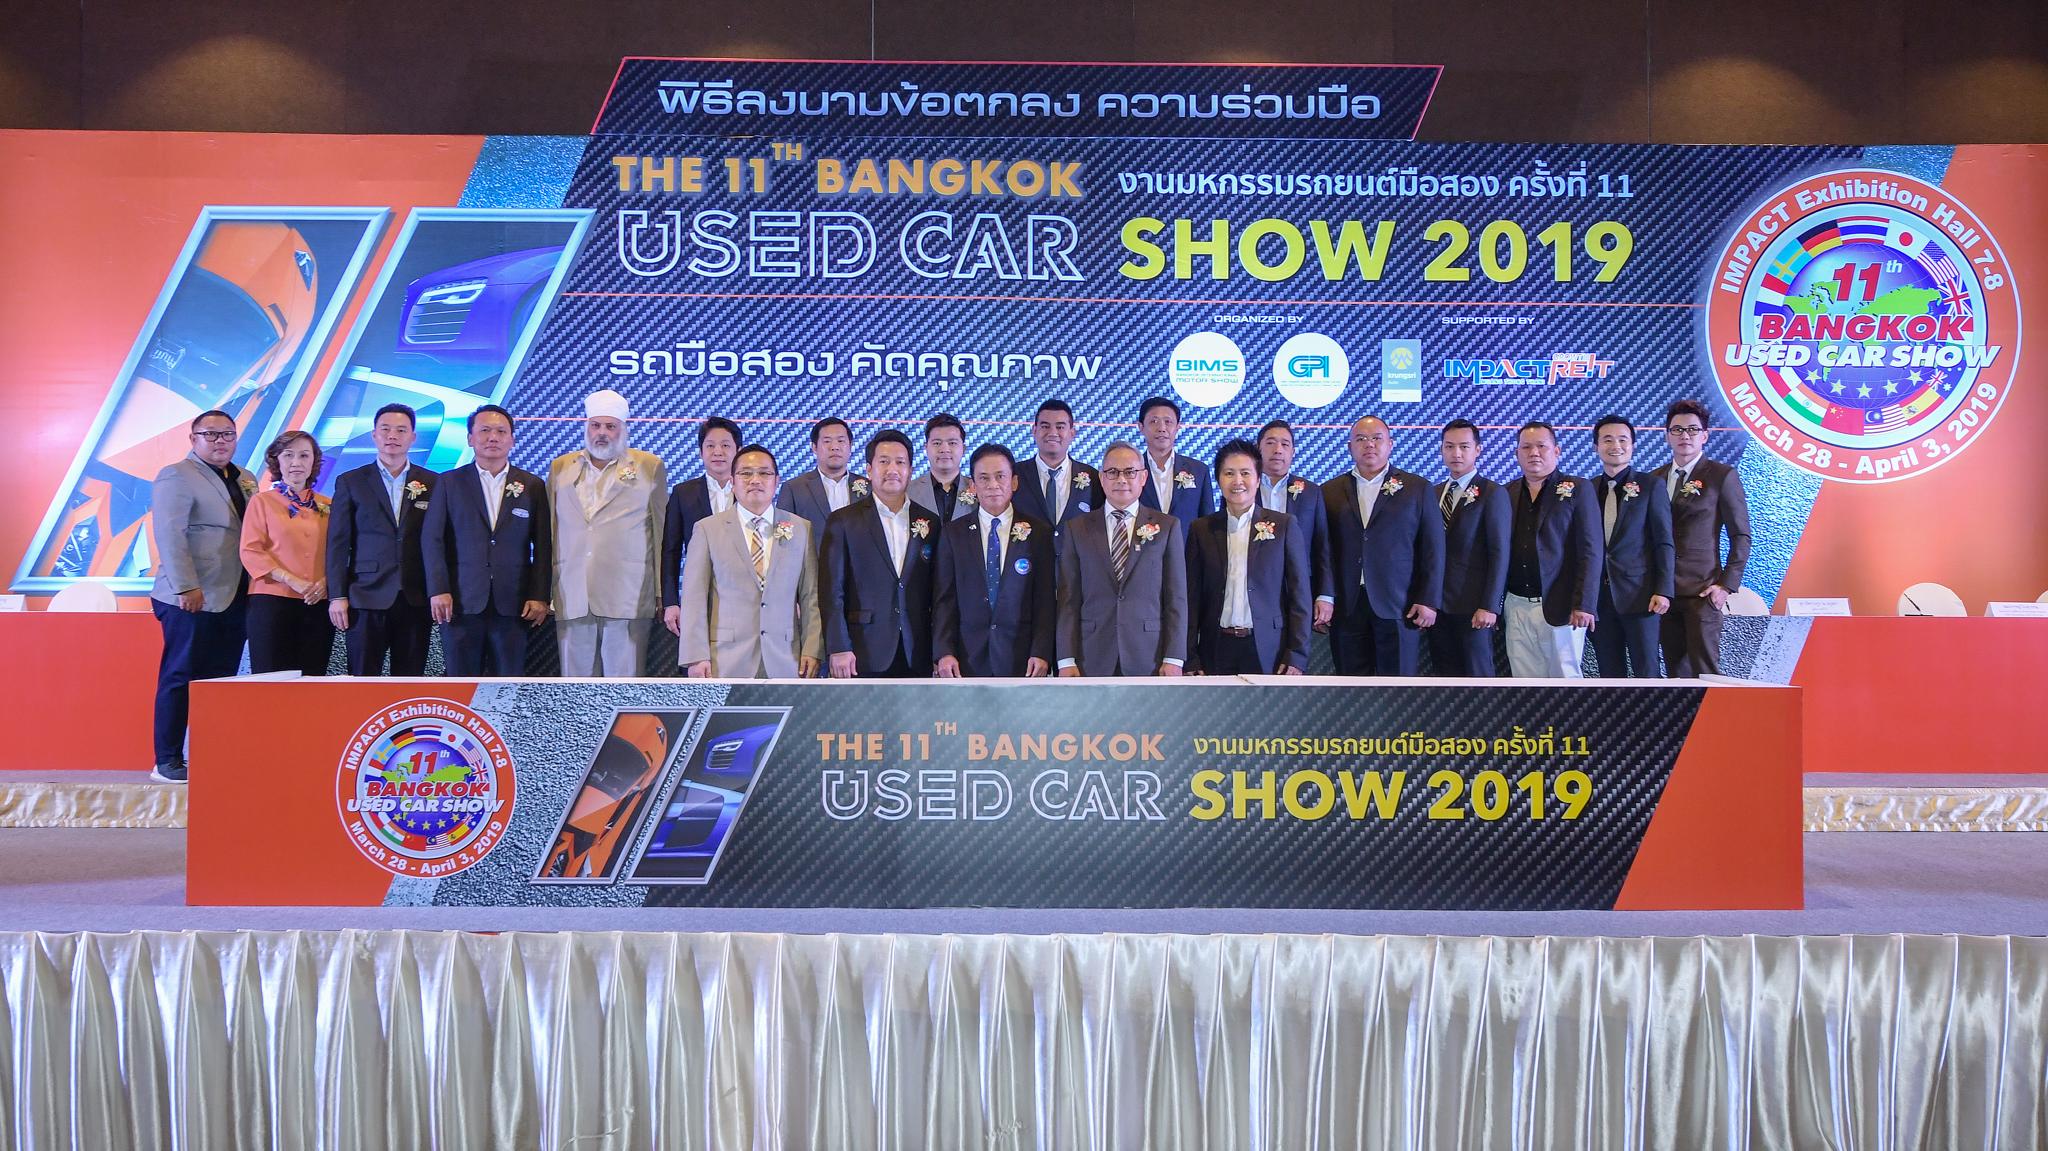 The 11th Bangkok Used Car Show 2019